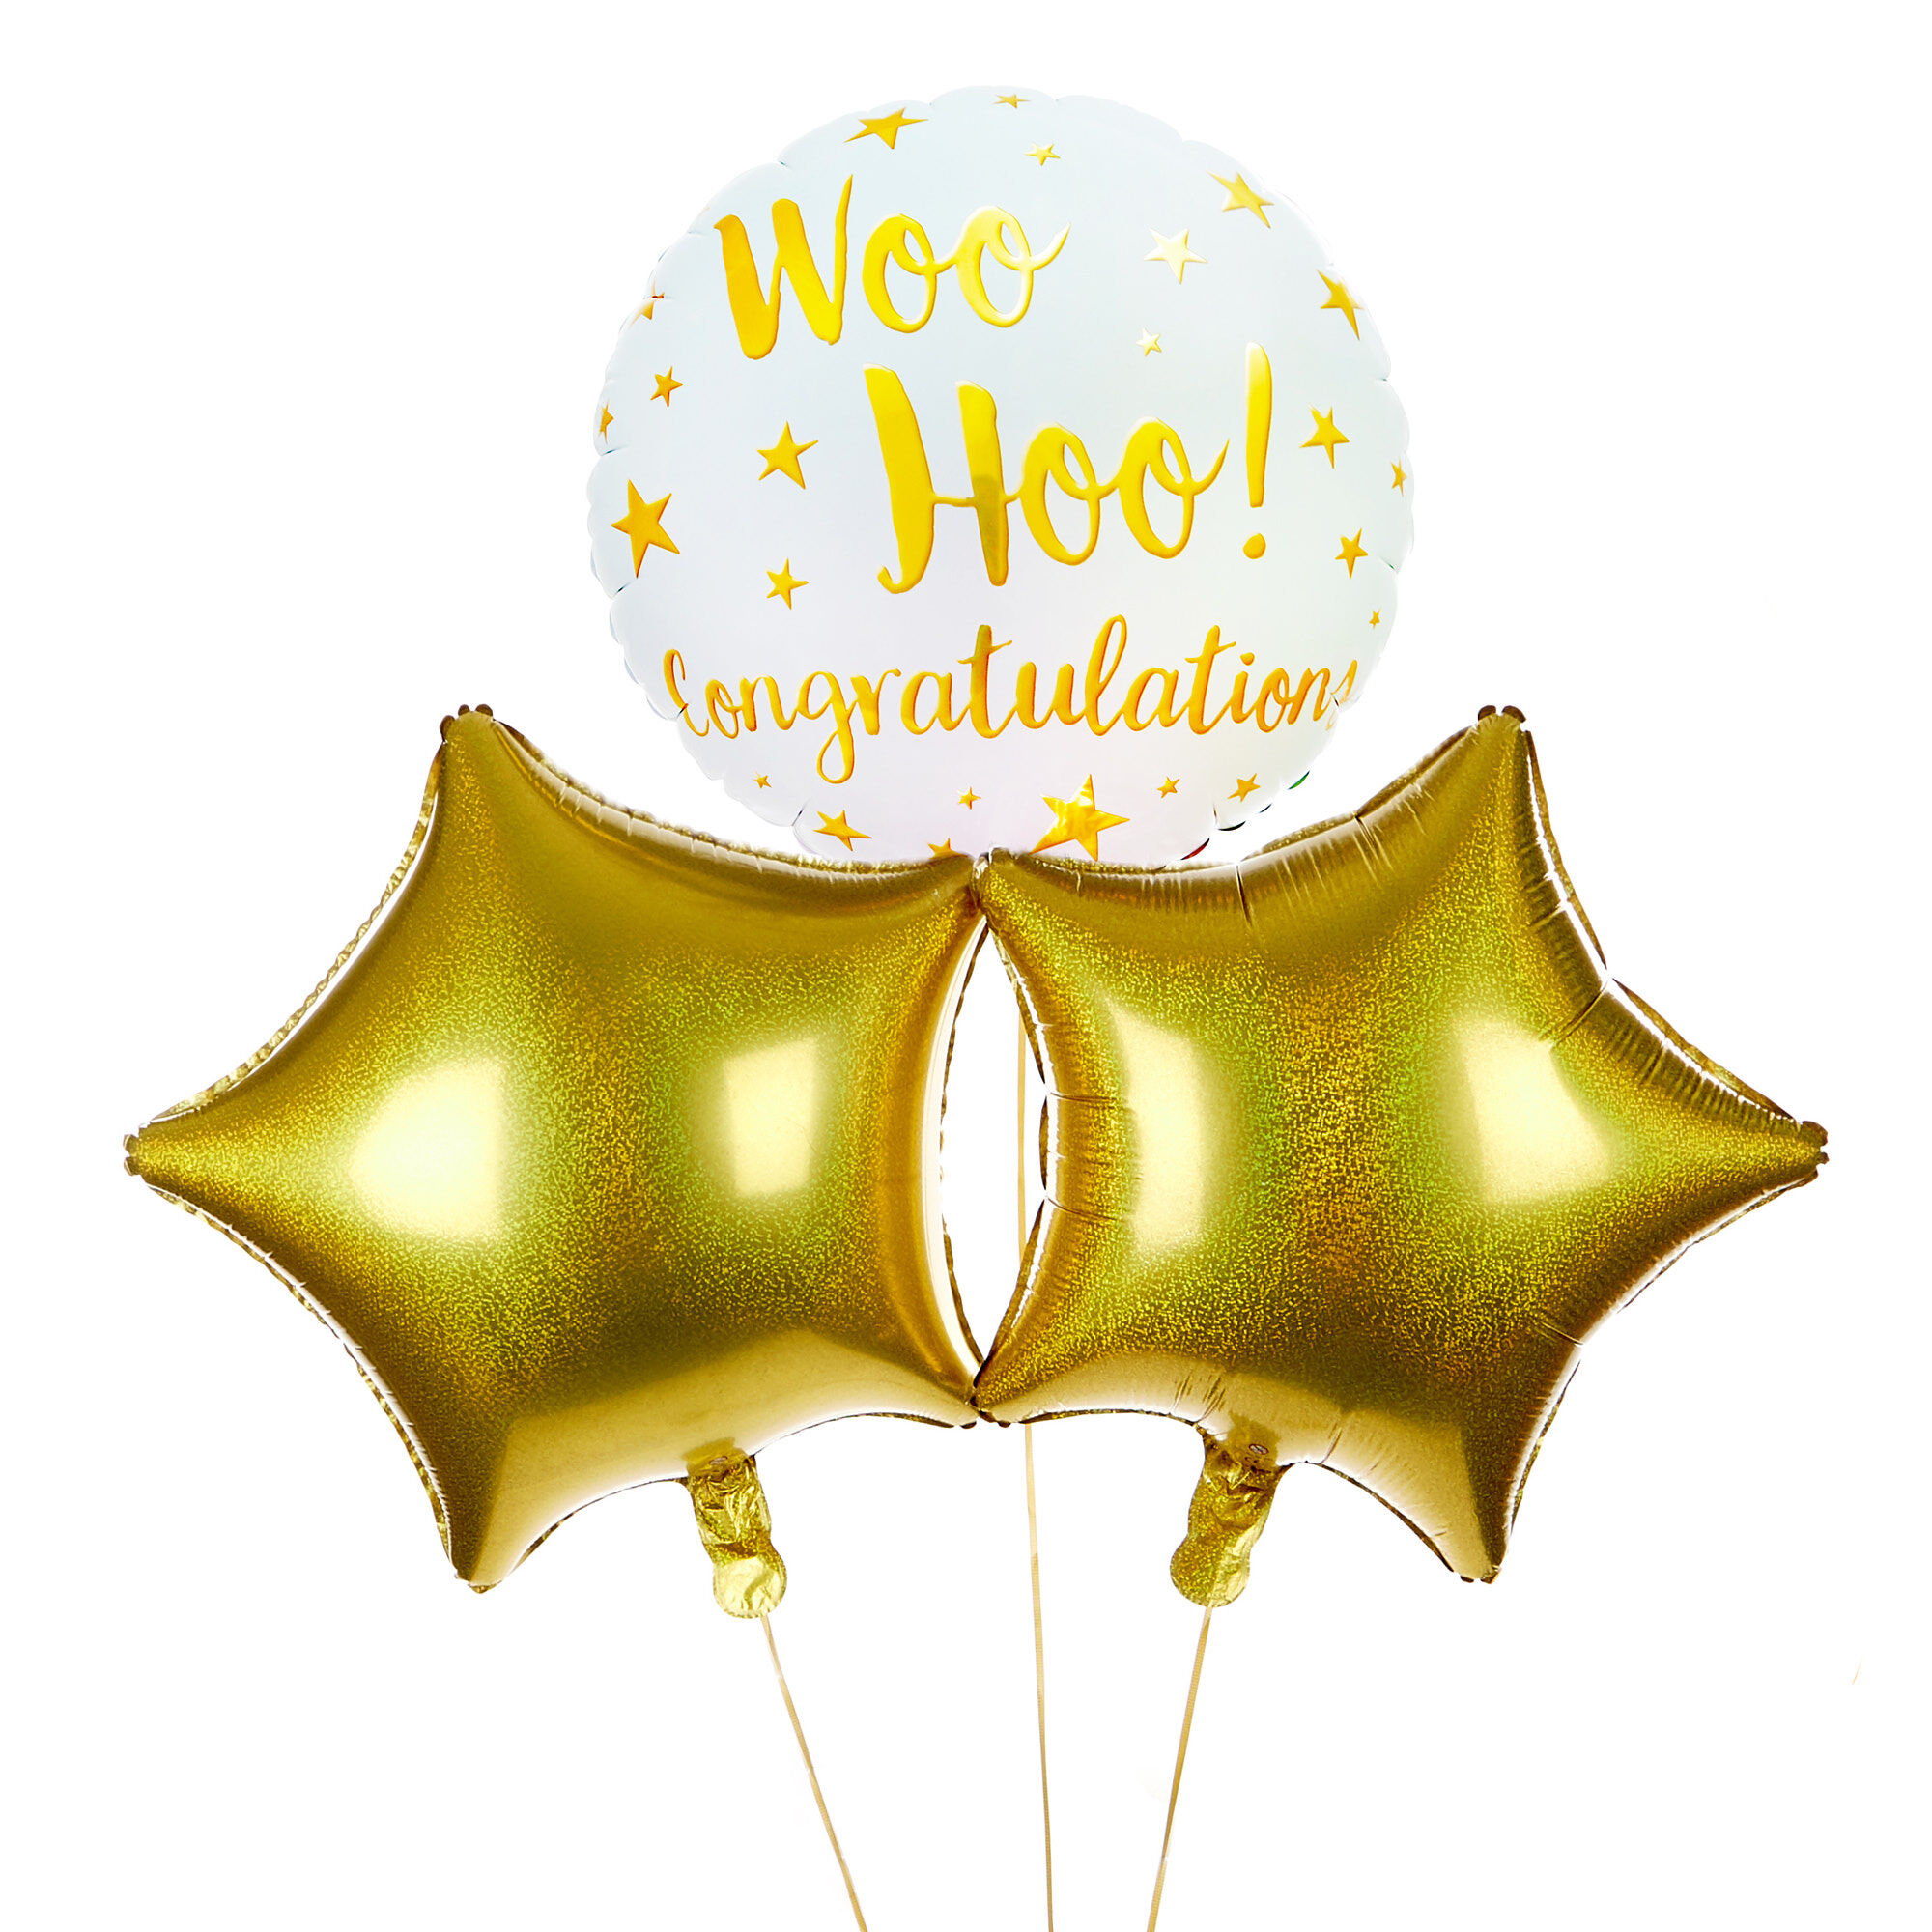 congratulations letter balloons